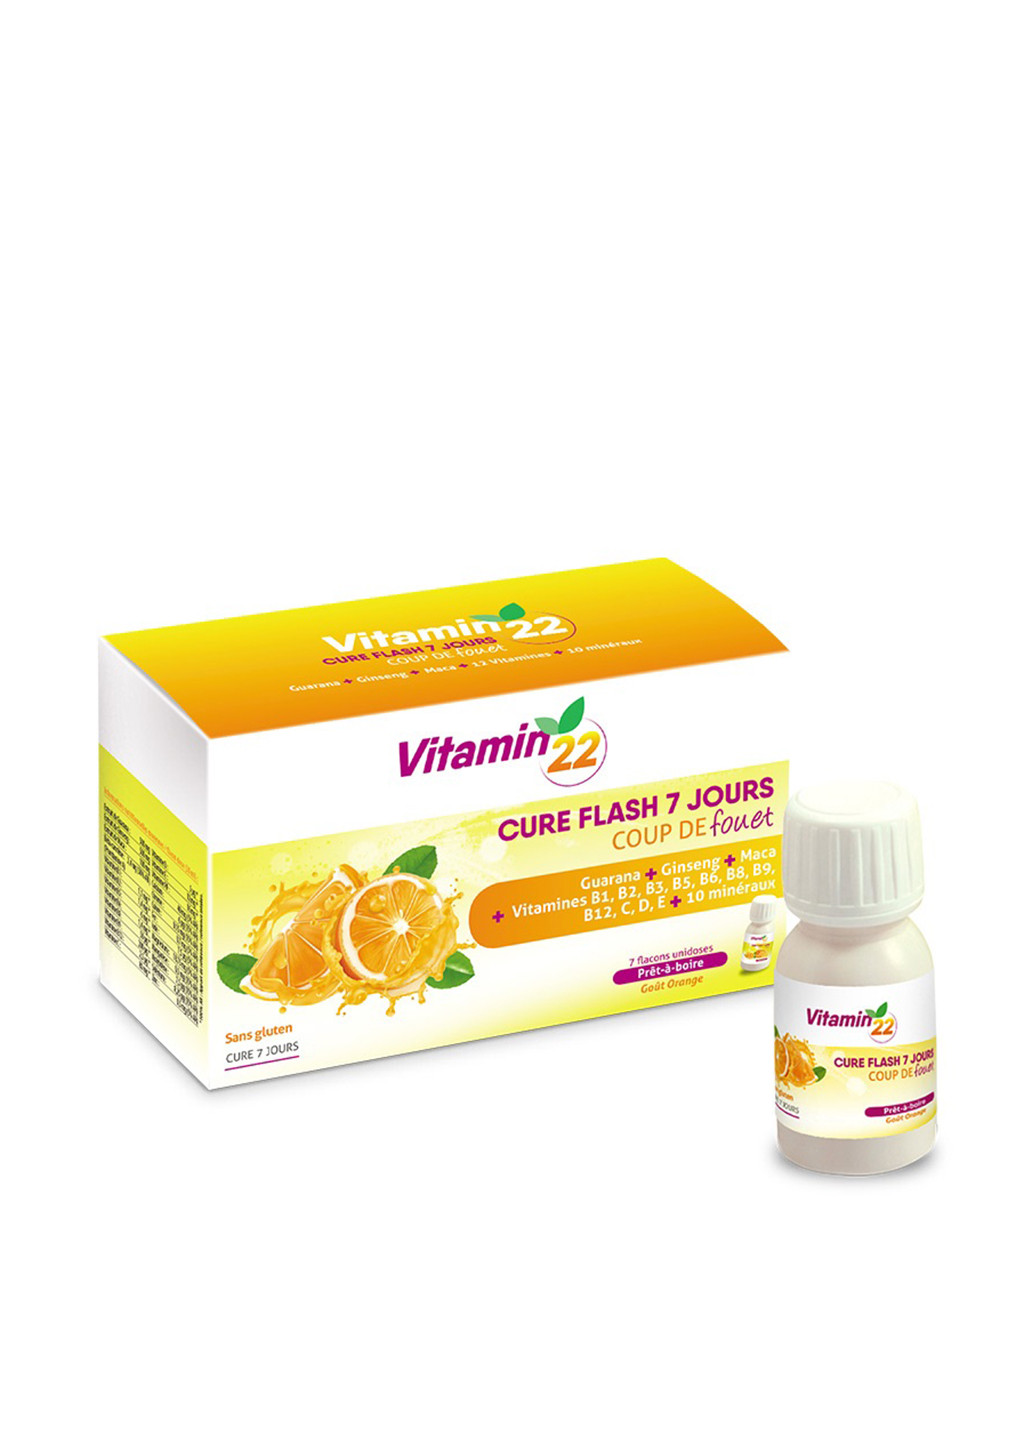 VITAMIN’22 КУРС МОЛНИЯ 7 ДНЕЙ / CURE FLASH 7 JOURS, 7 флаконов-доз Vitamin'22 (17020495)